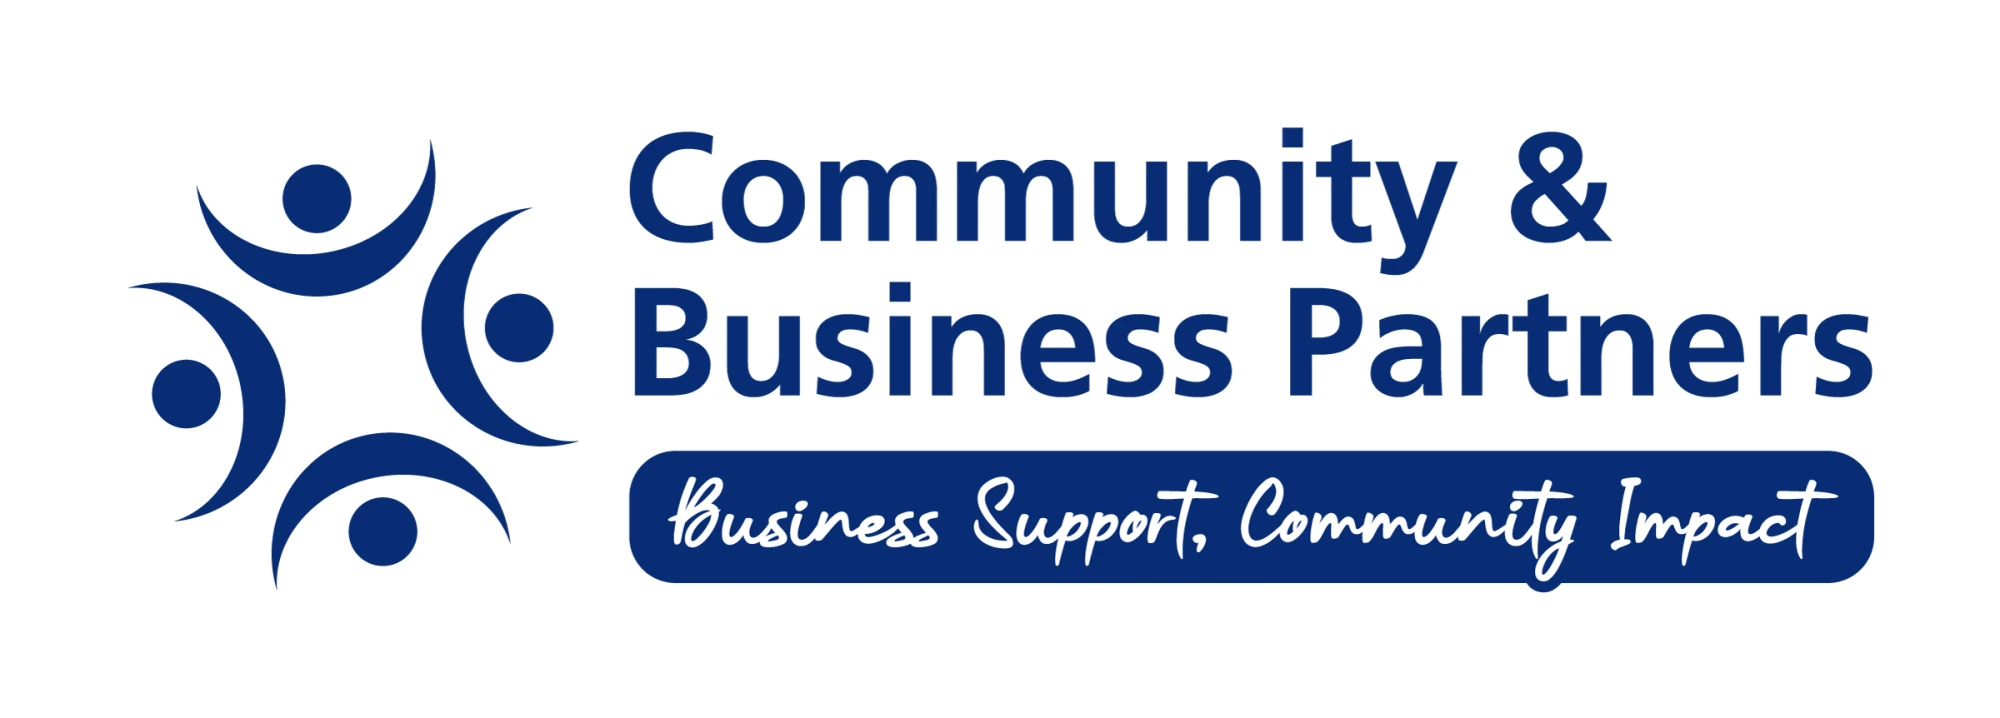 Community & Business Partners CIC Photo